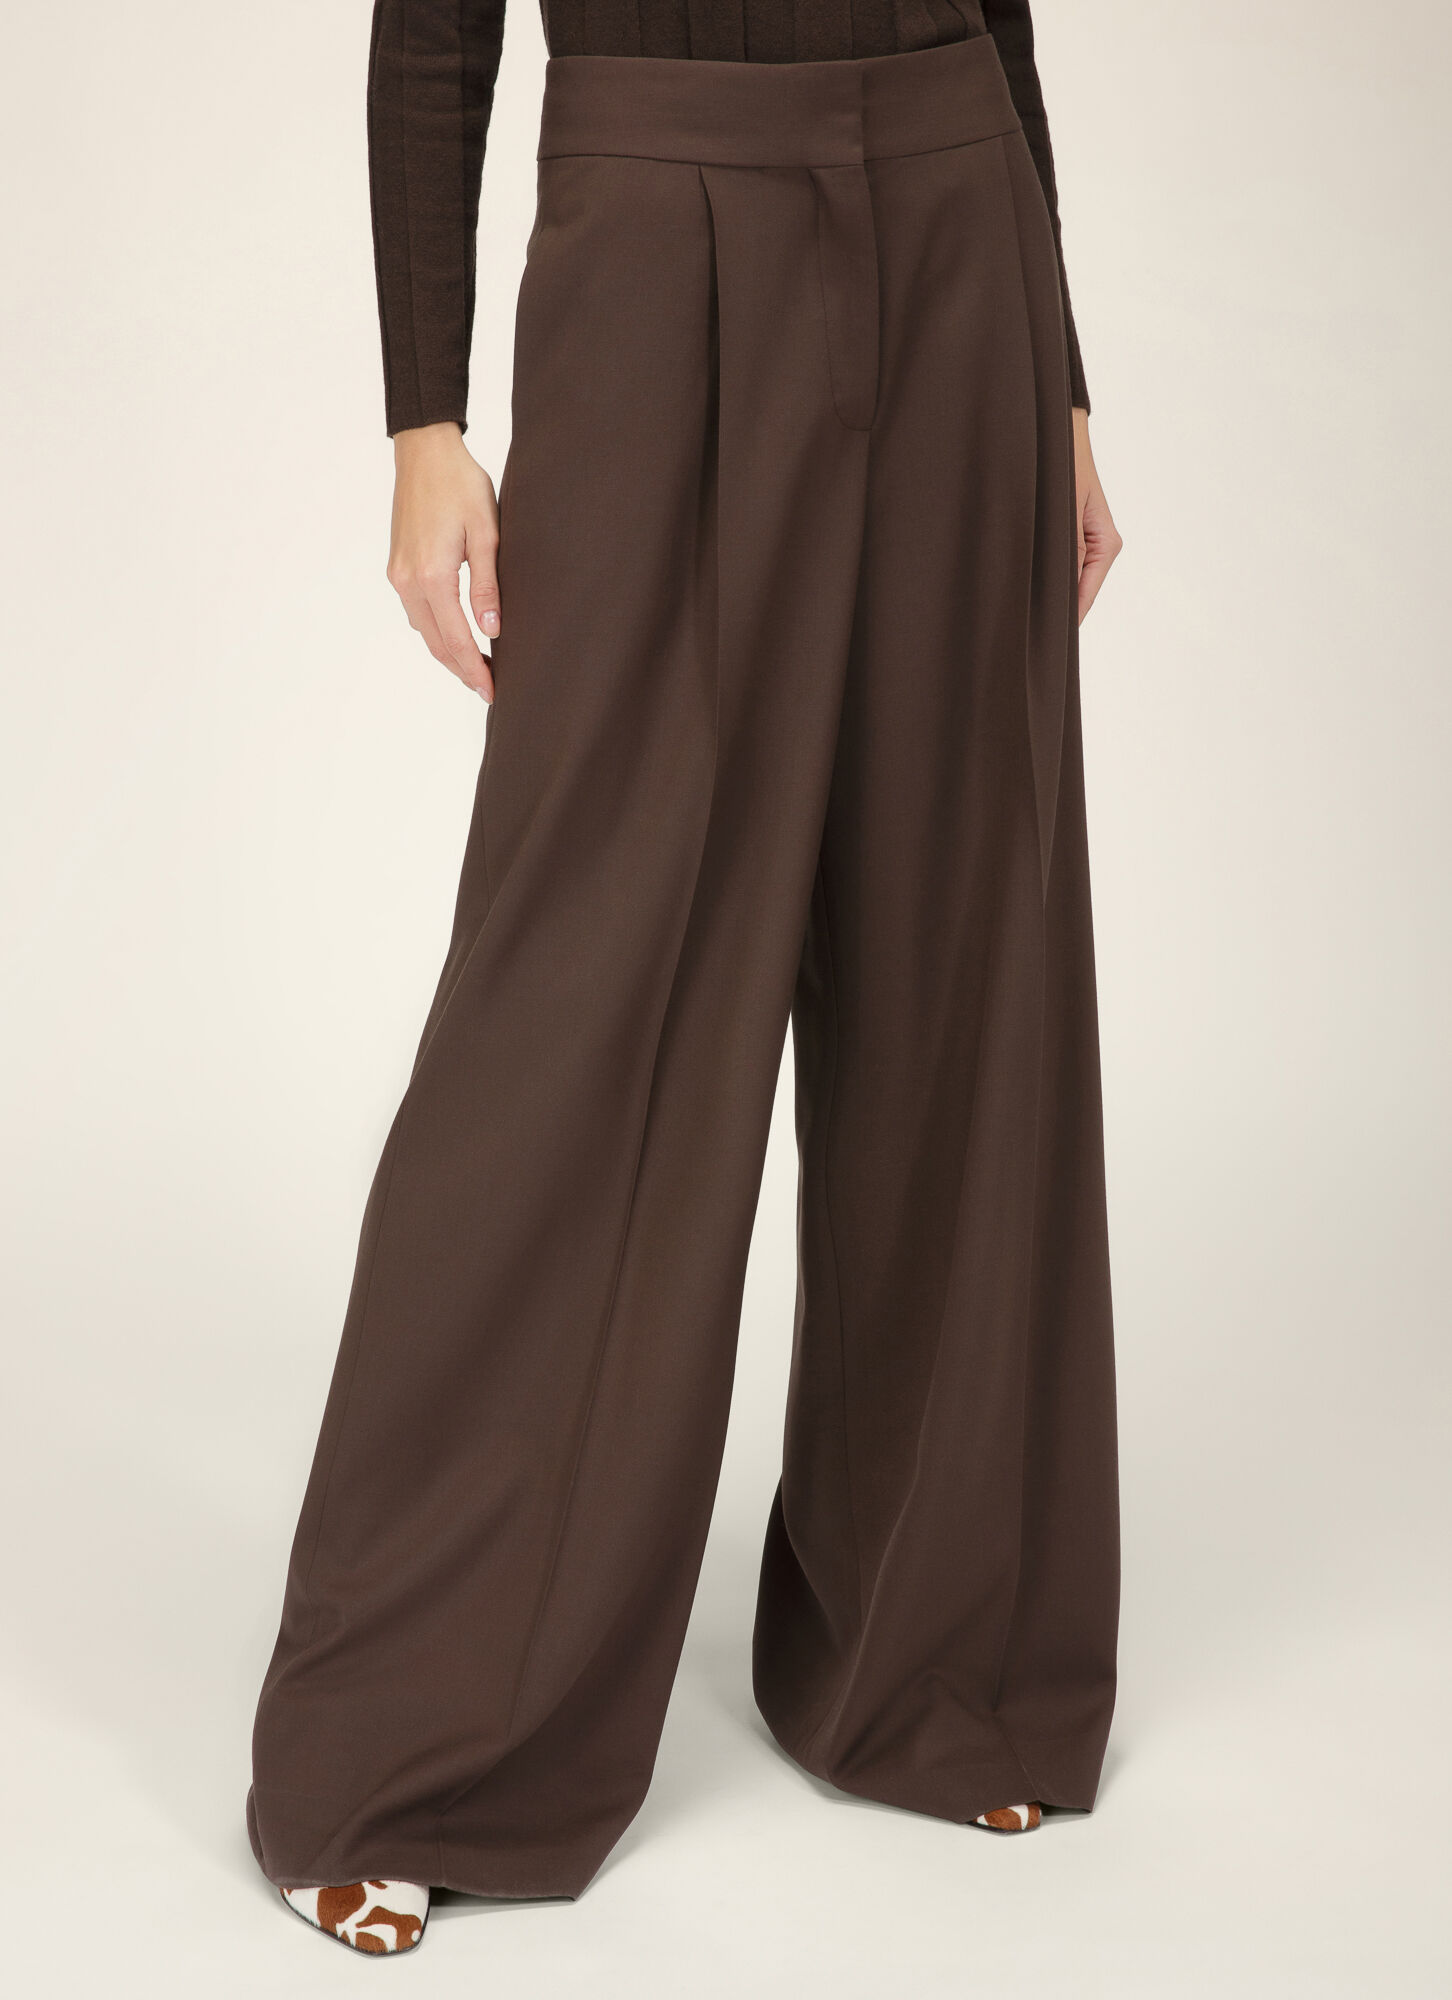 Cambio Jersey Pants brown elegant Fashion Trousers Jersey Pants 